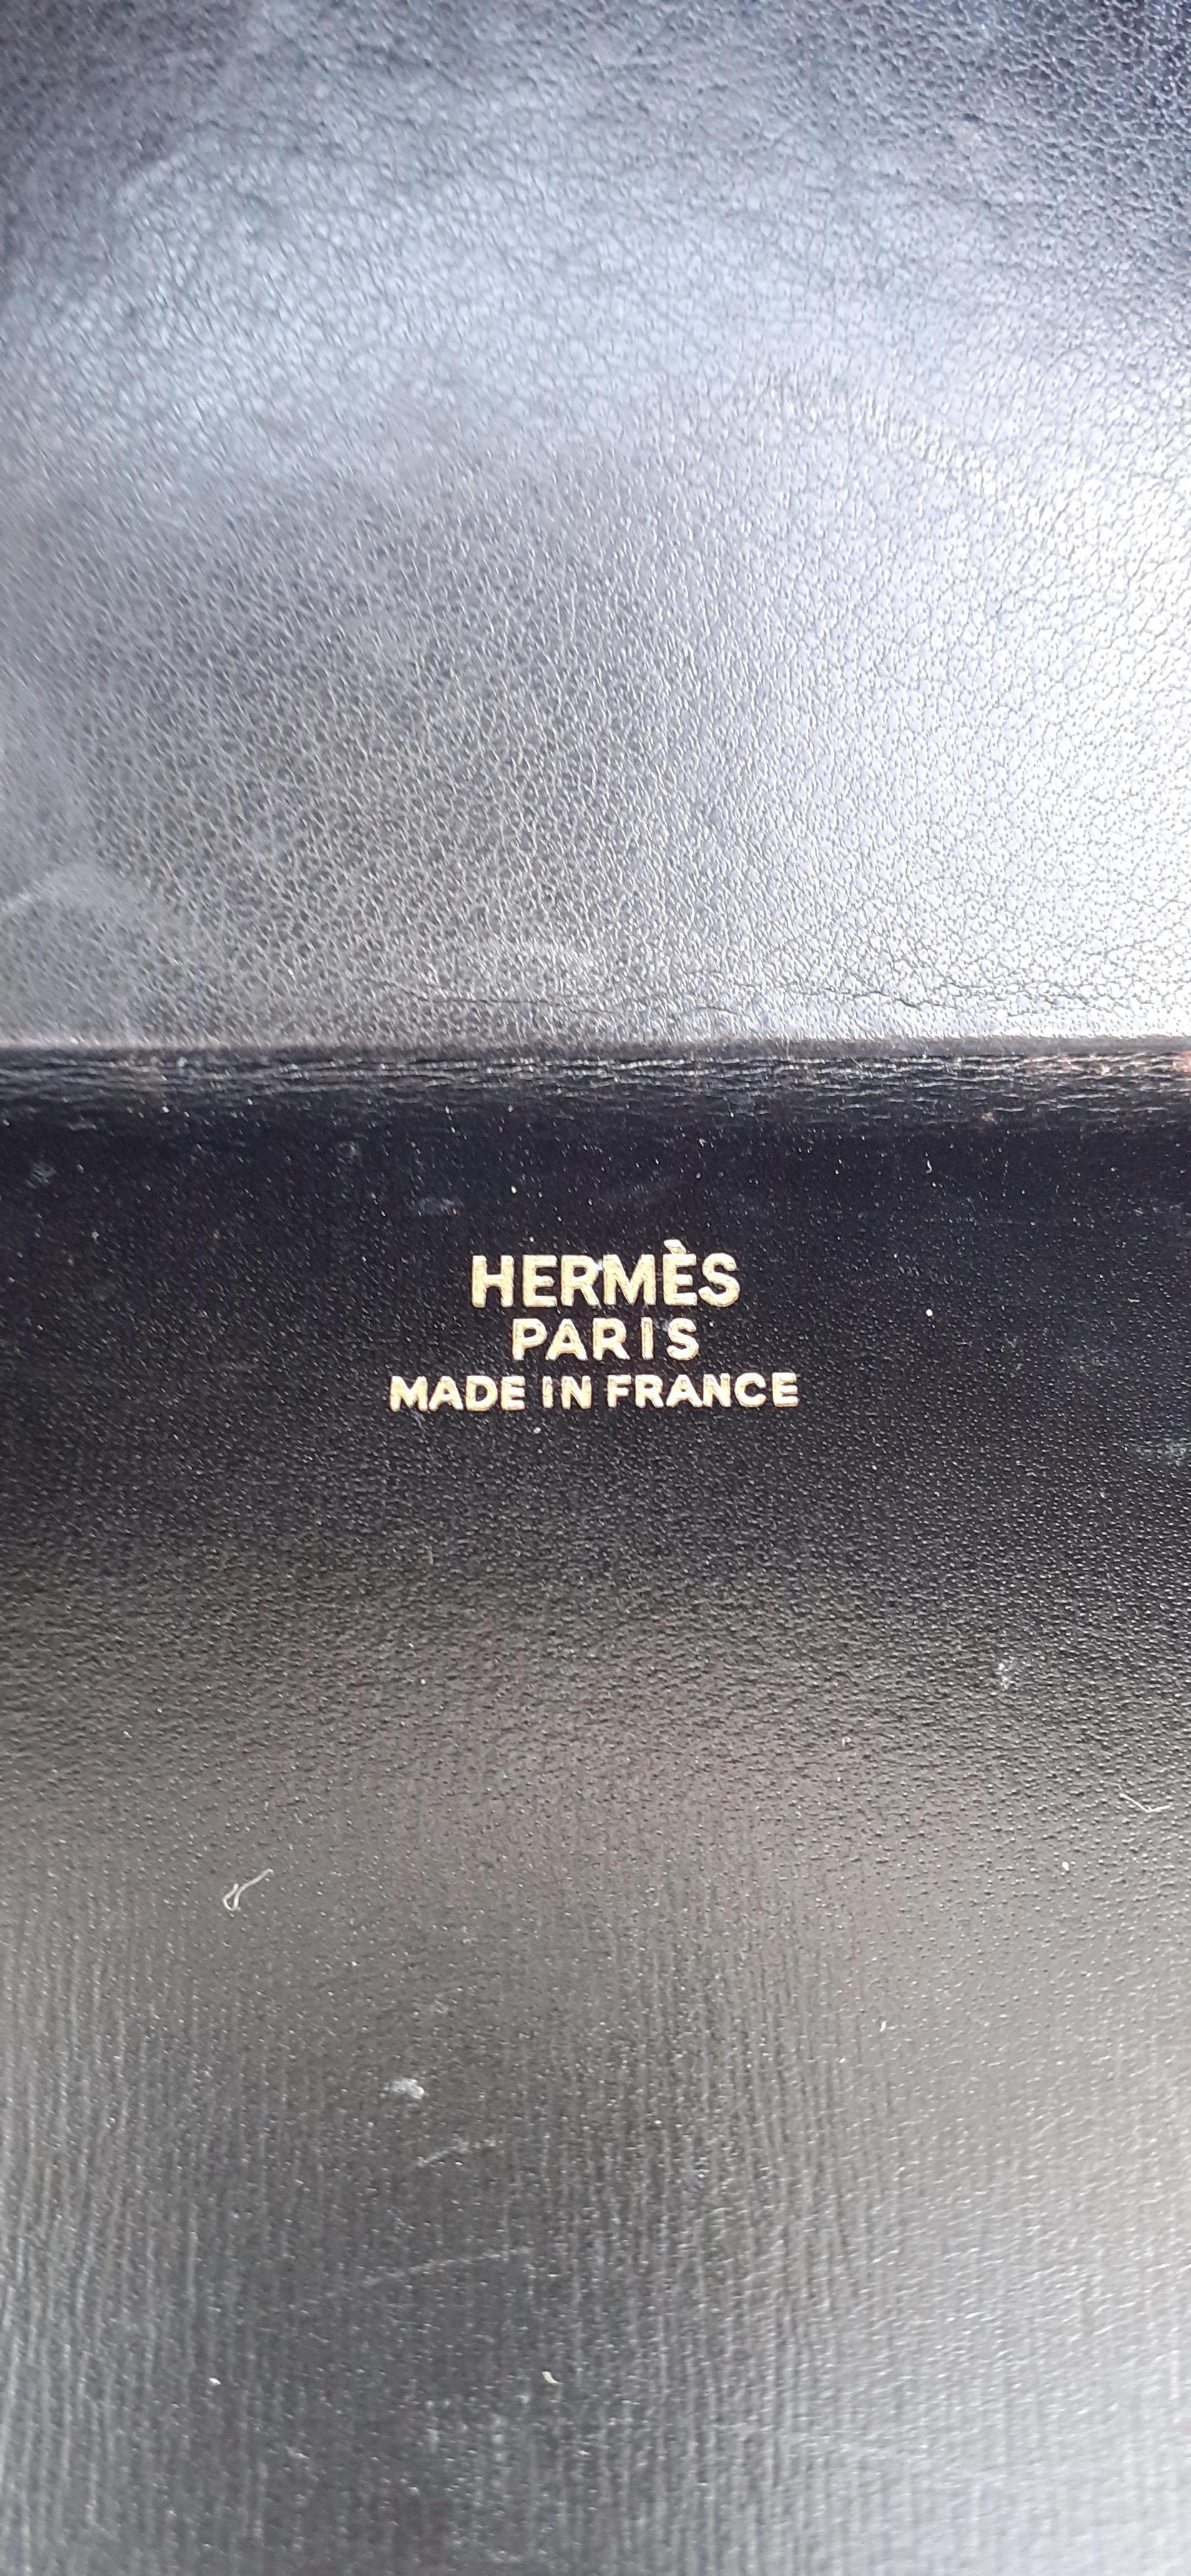 Exceptional Hermès Vintage Tee Time Bag Minaudiere Black Box Leather Ghw RARE 10